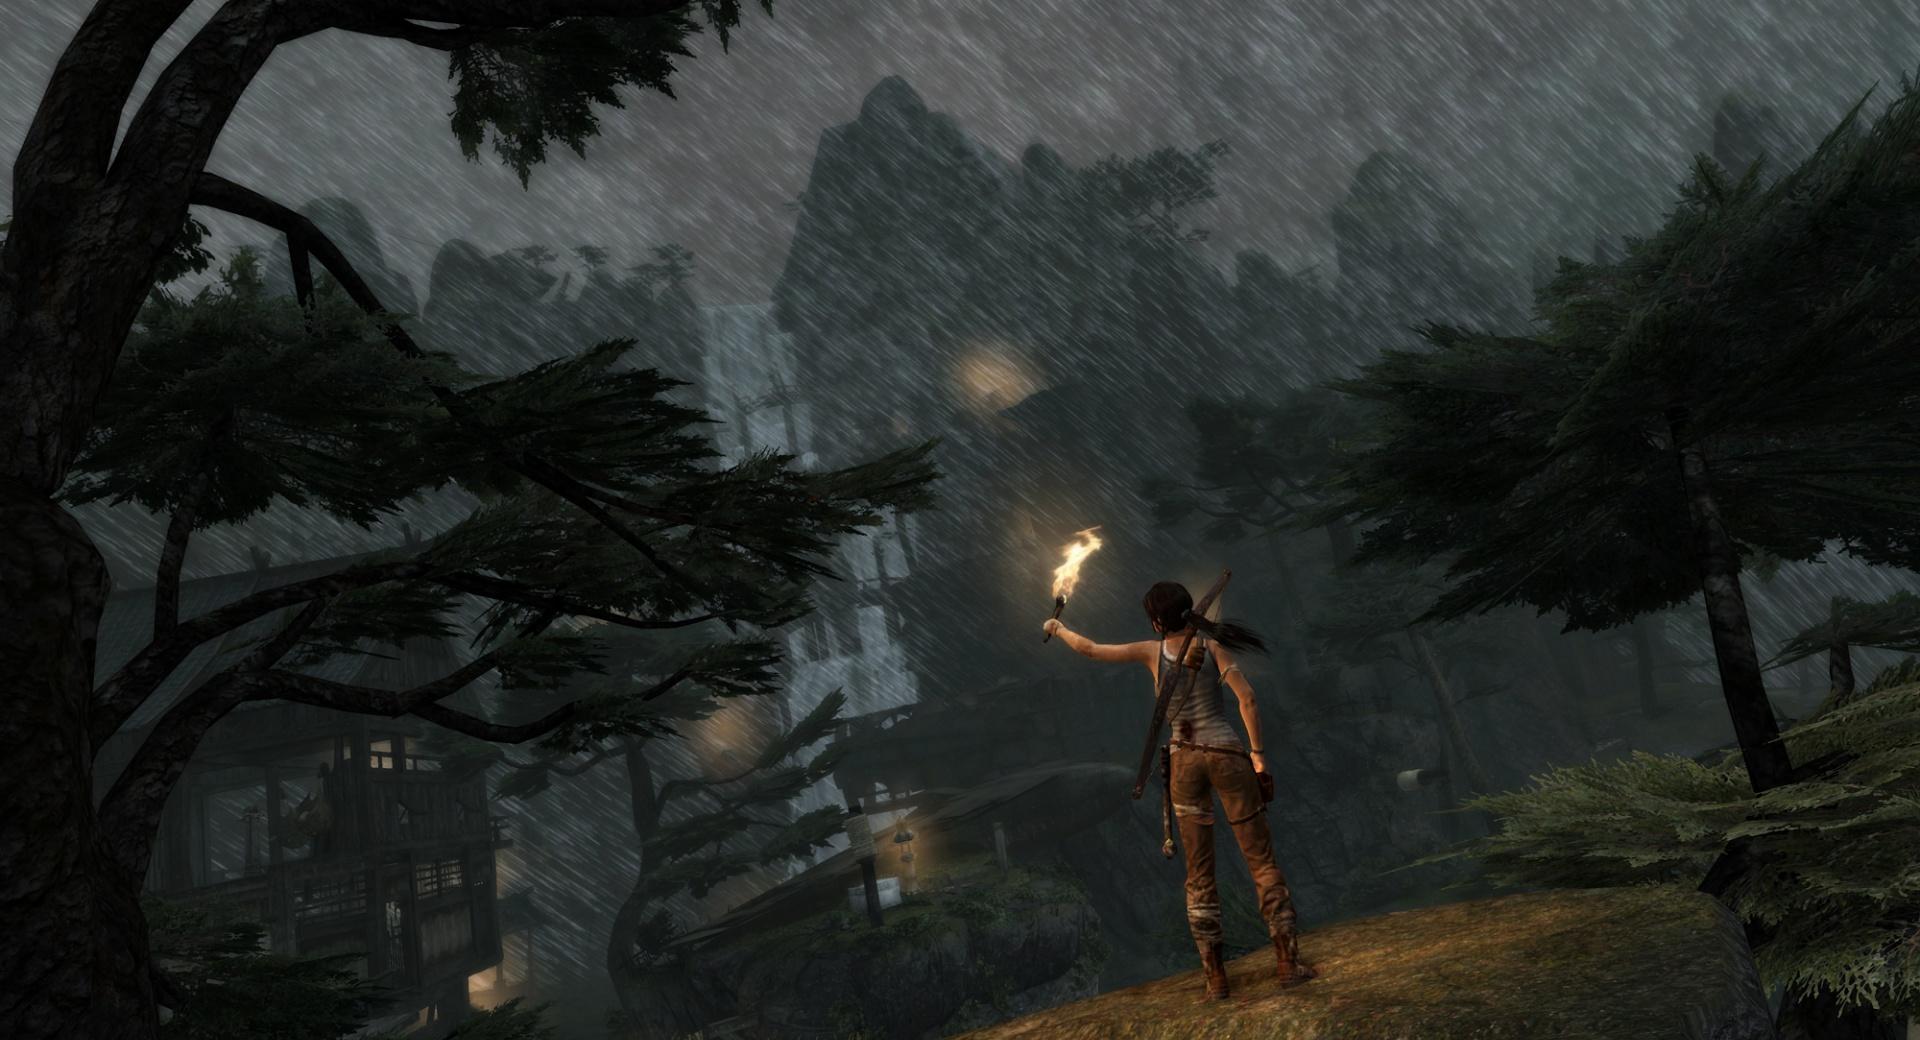 Lara Croft in the Rain (Tomb Raider 2013) at 1280 x 960 size wallpapers HD quality